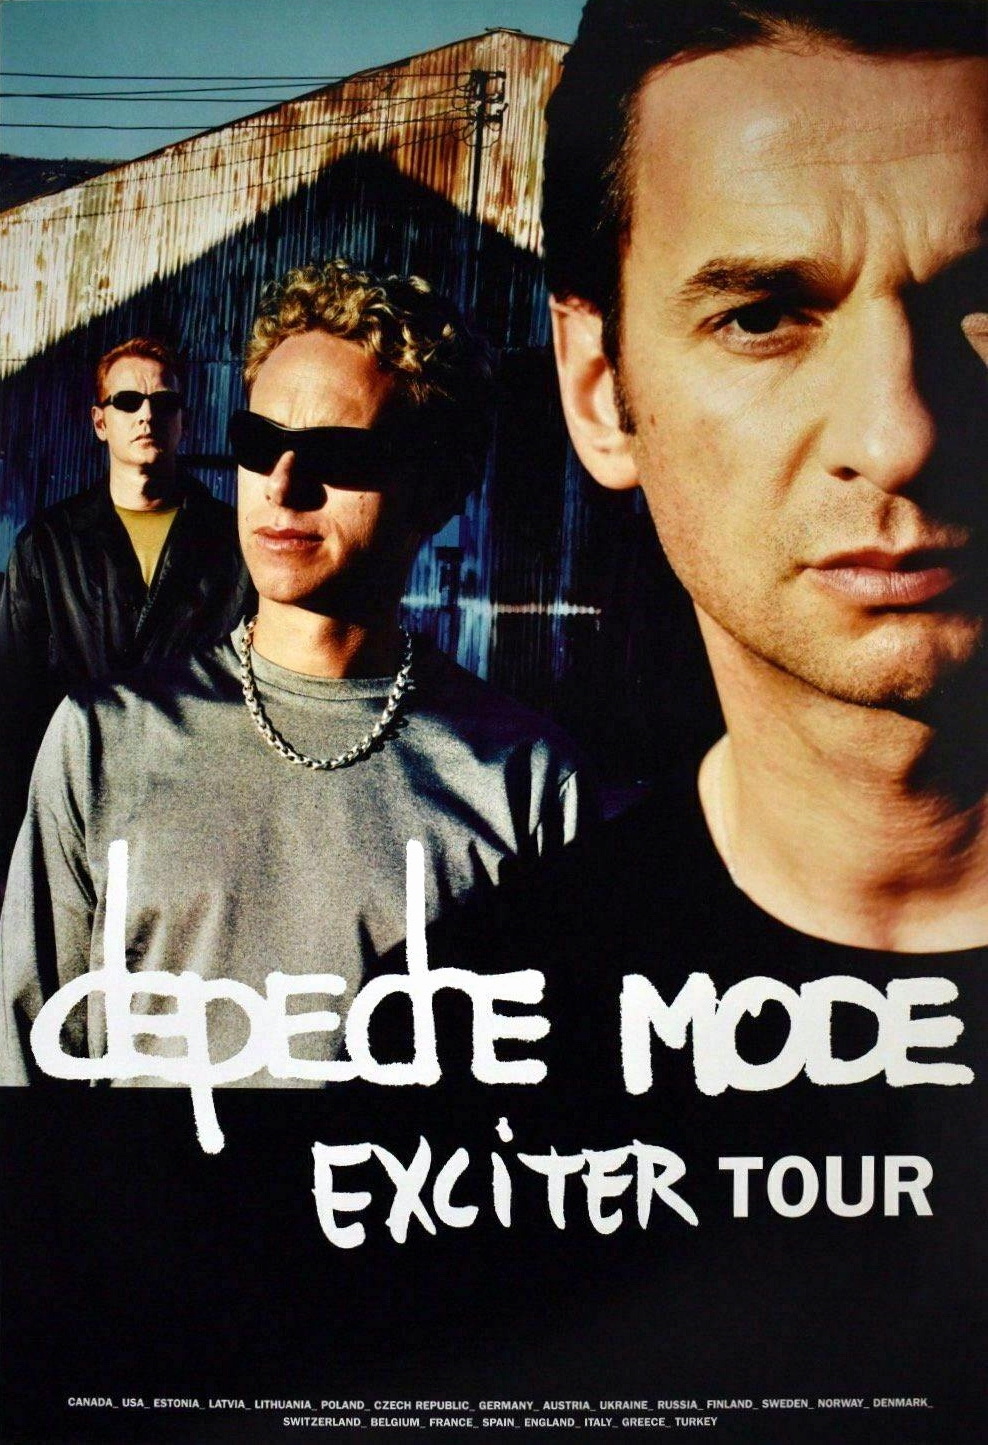 depeche mode 2009 tour dates